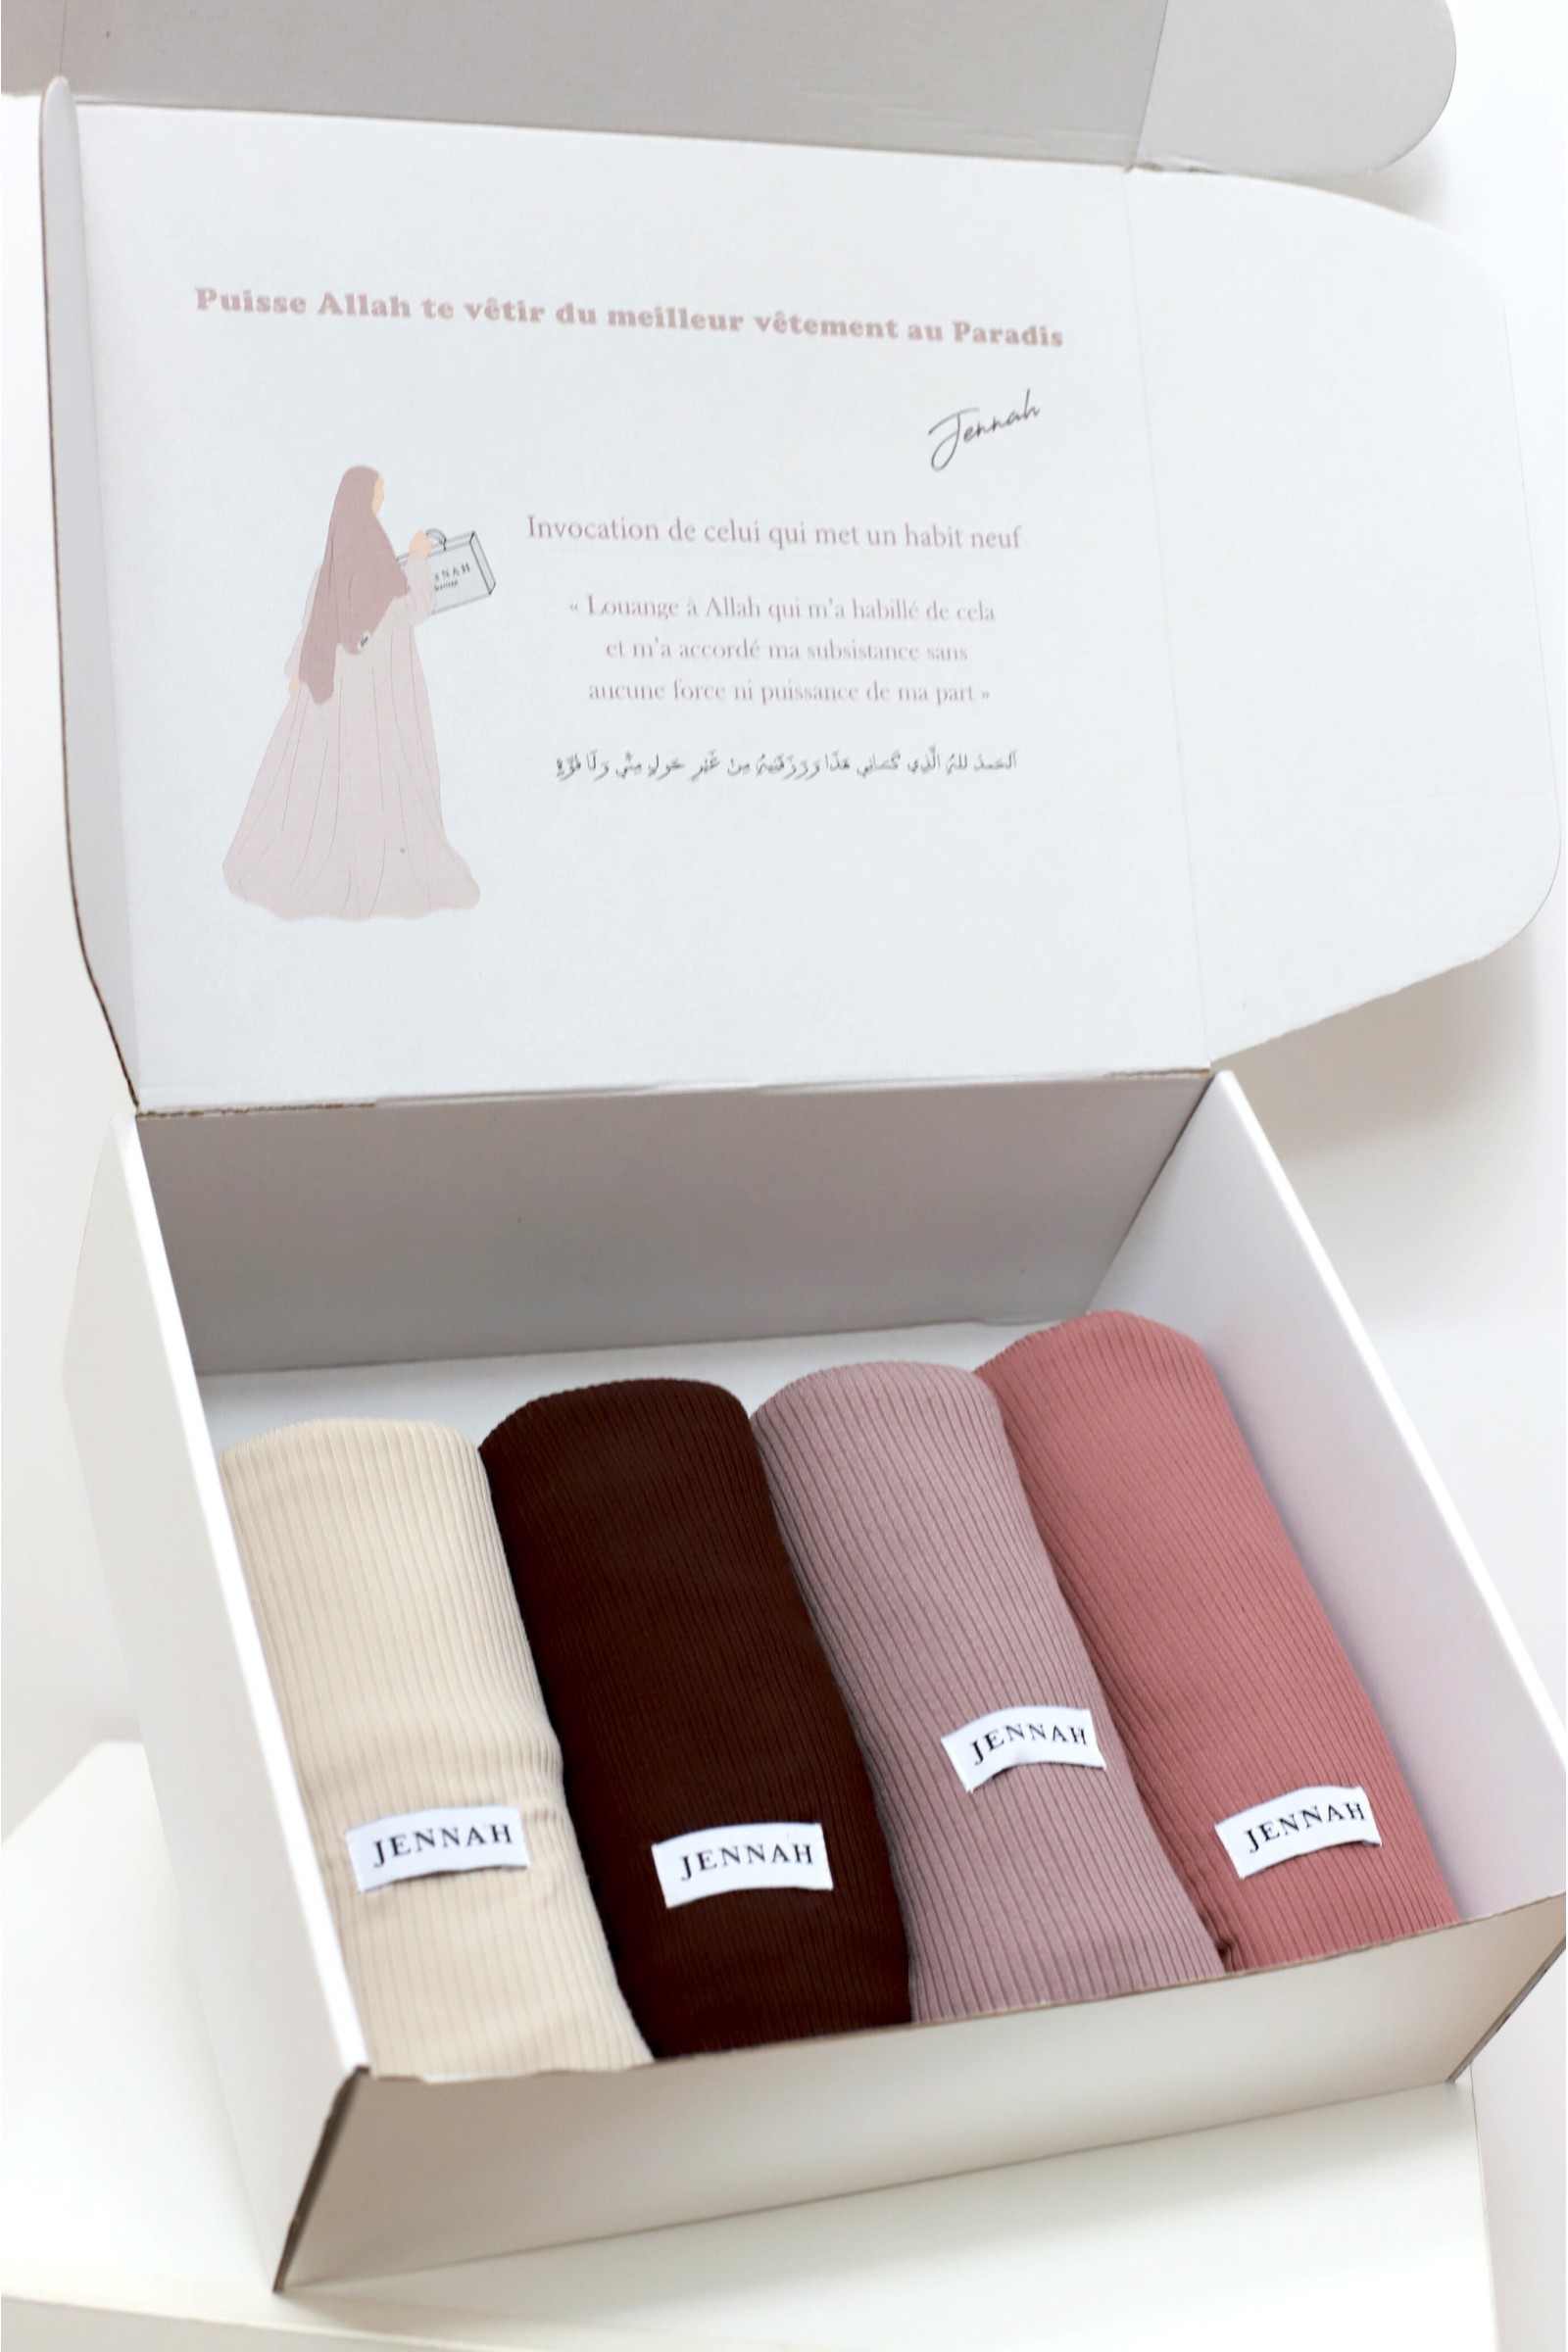 Hijab box for veiled Muslim women, veil box to offer women